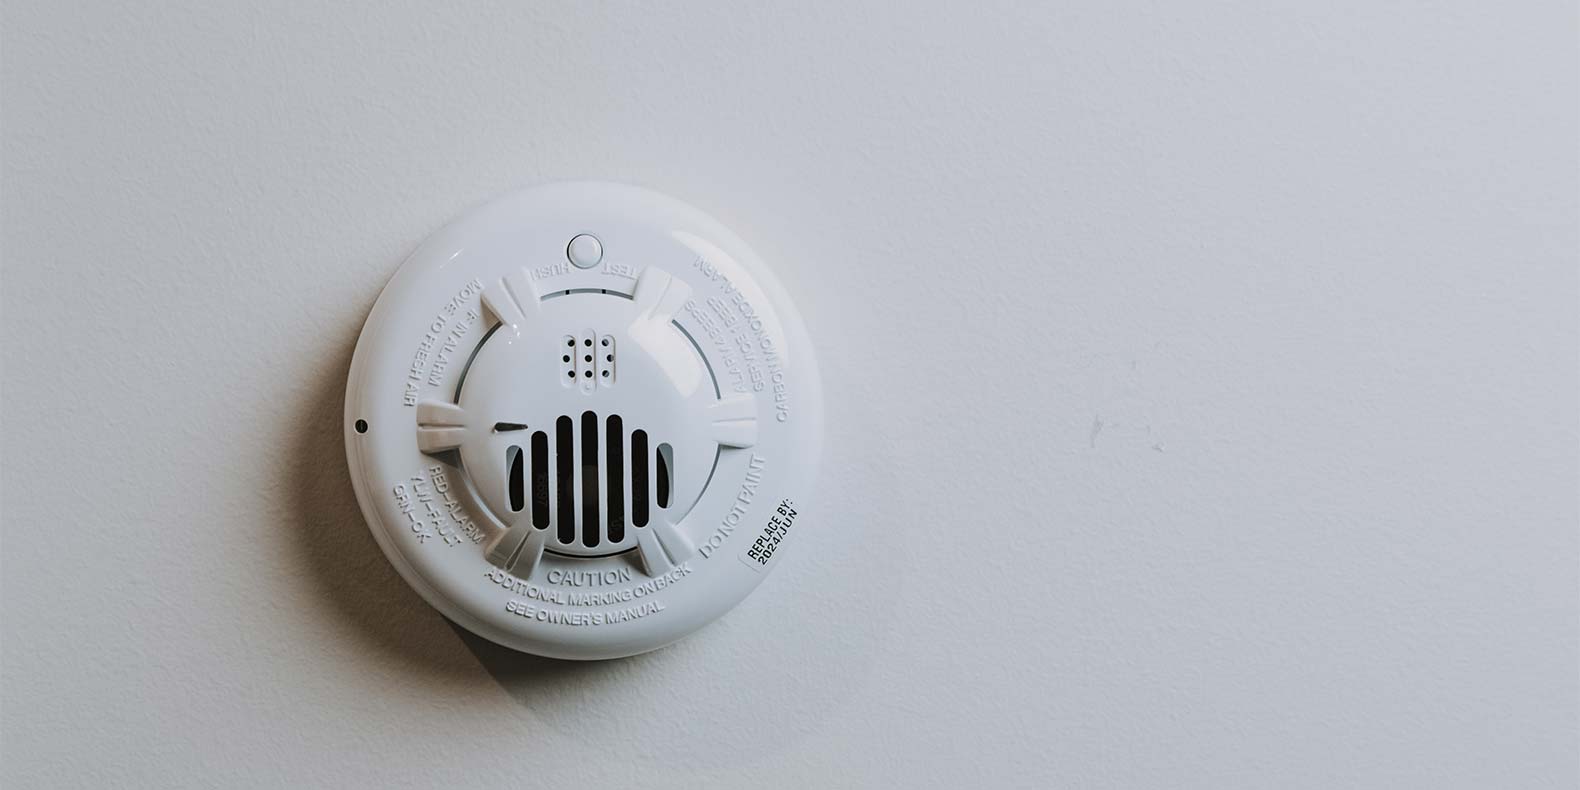 Home Safety Guide: Where to Place Carbon Monoxide Detectors